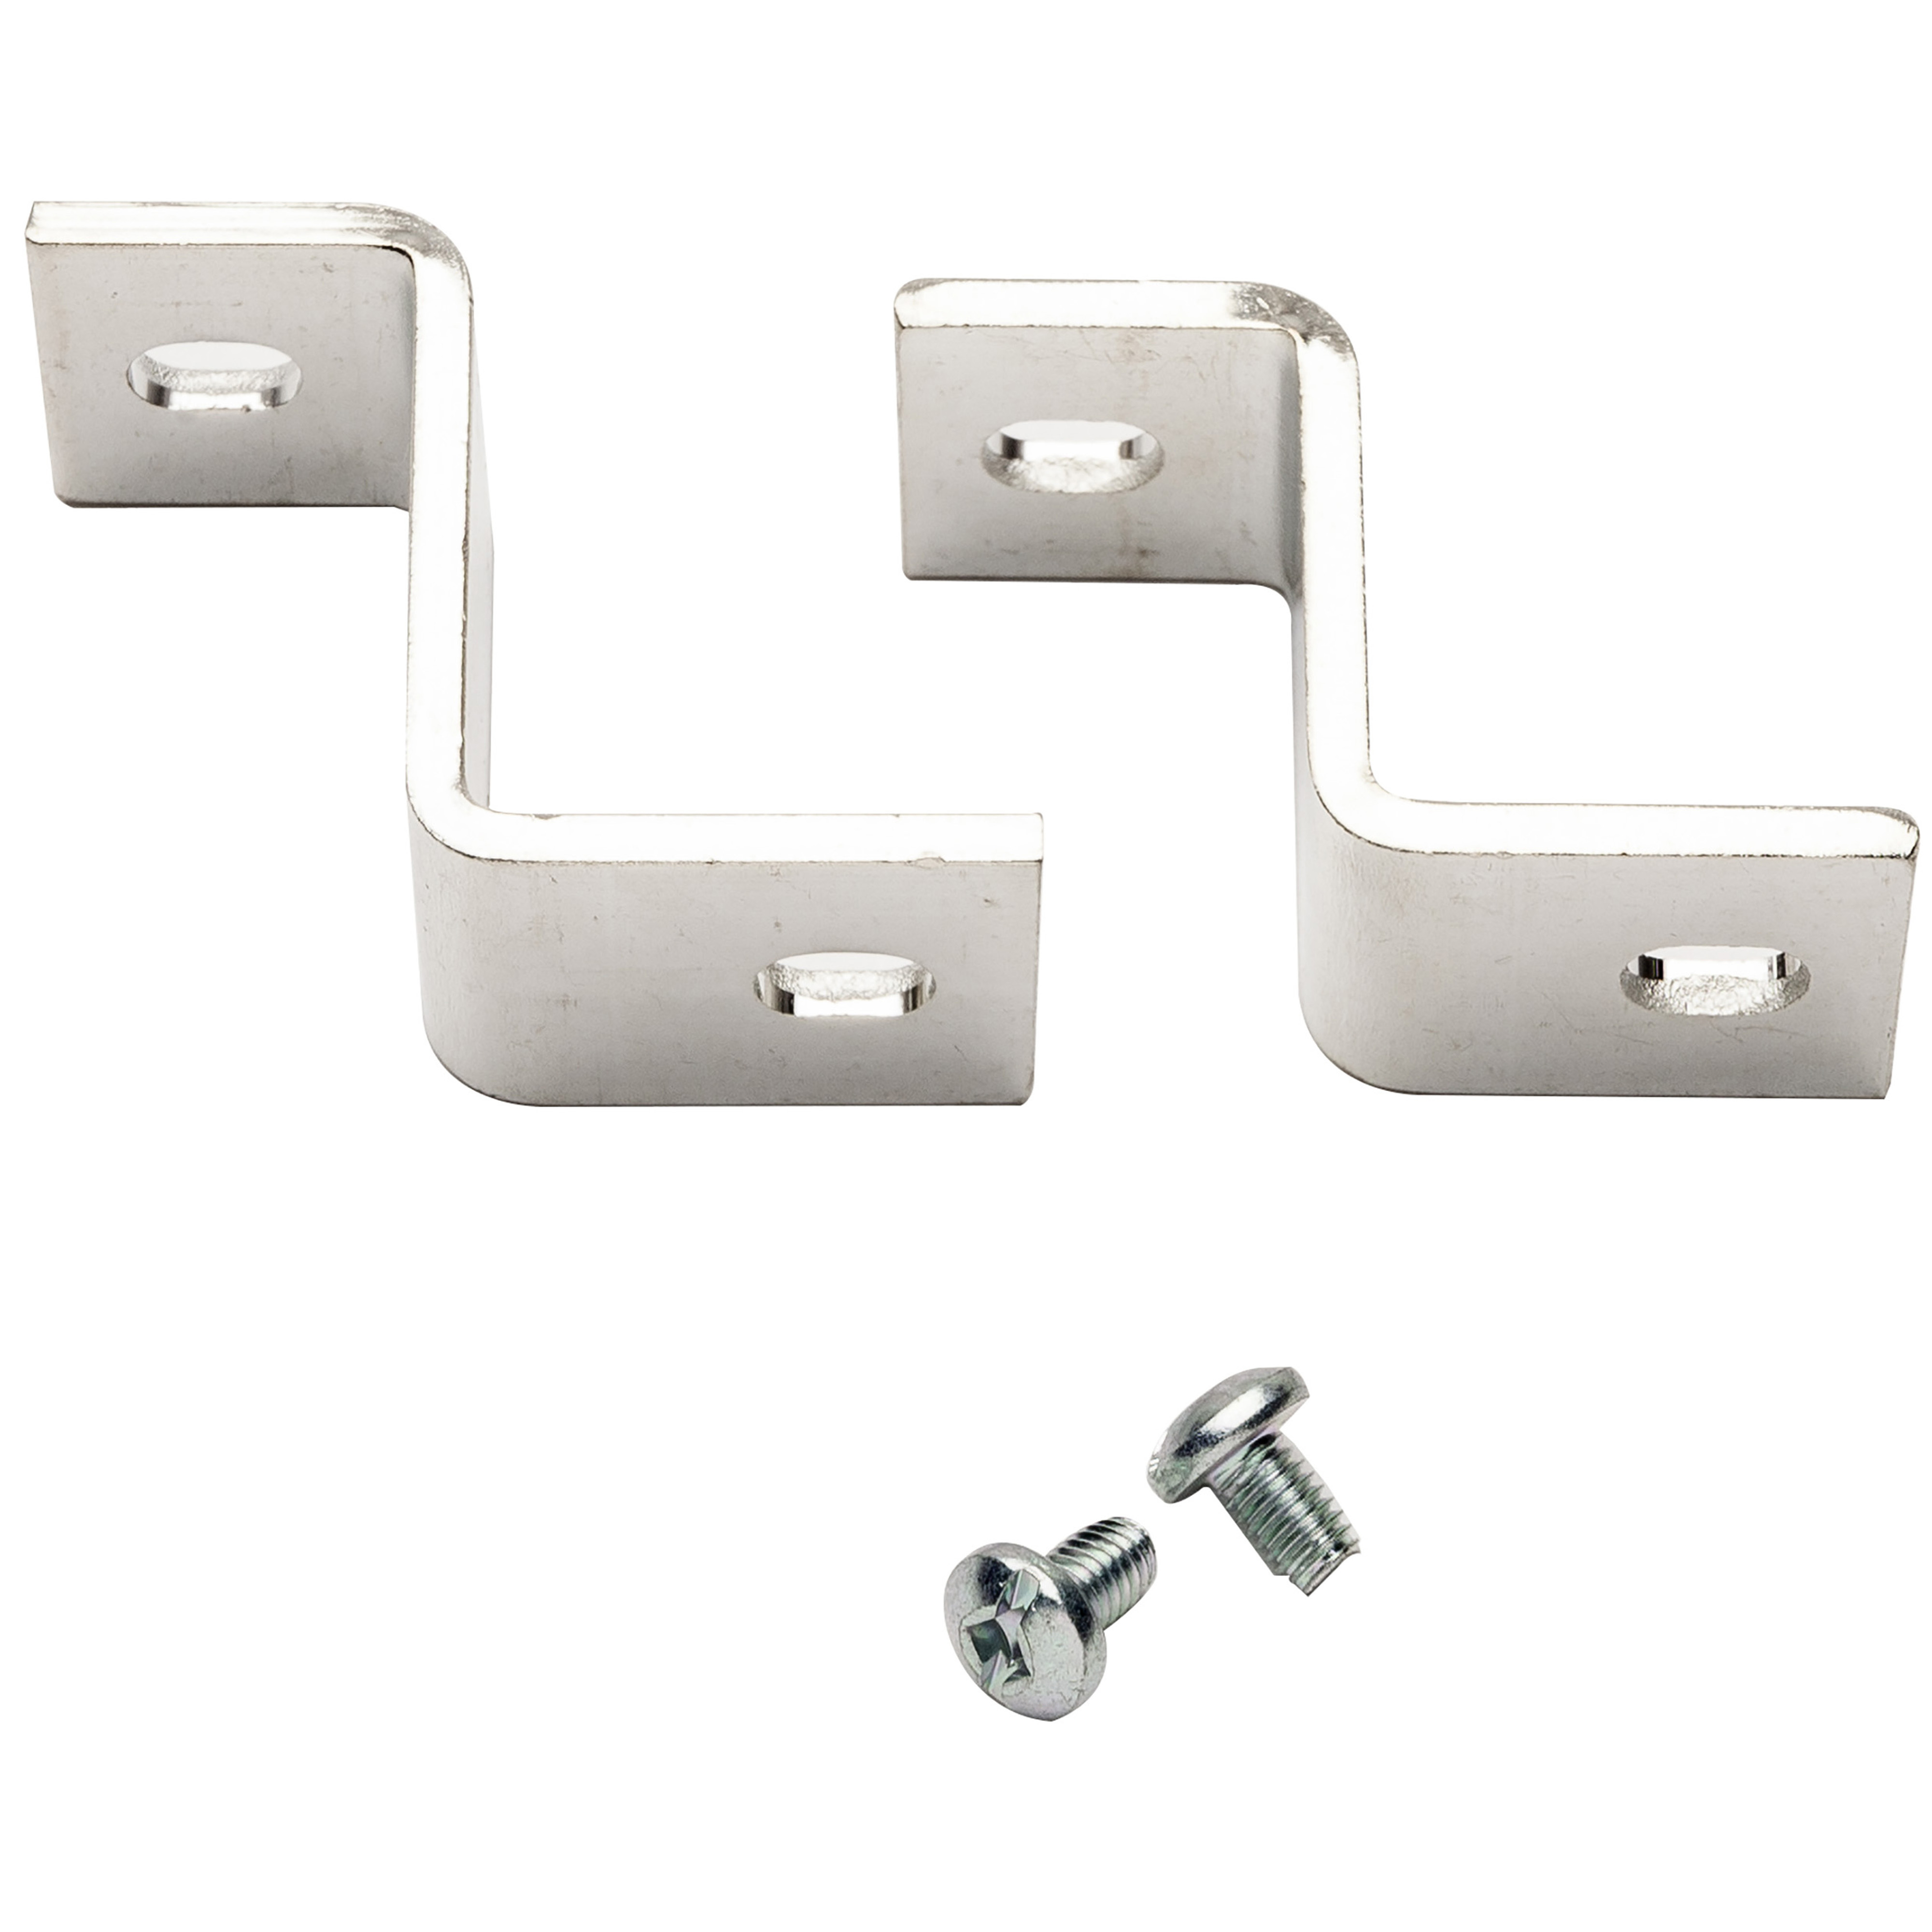 Bonding neutral strap kit for condo riser, NF, NQ panelboard accessory, 400-600A